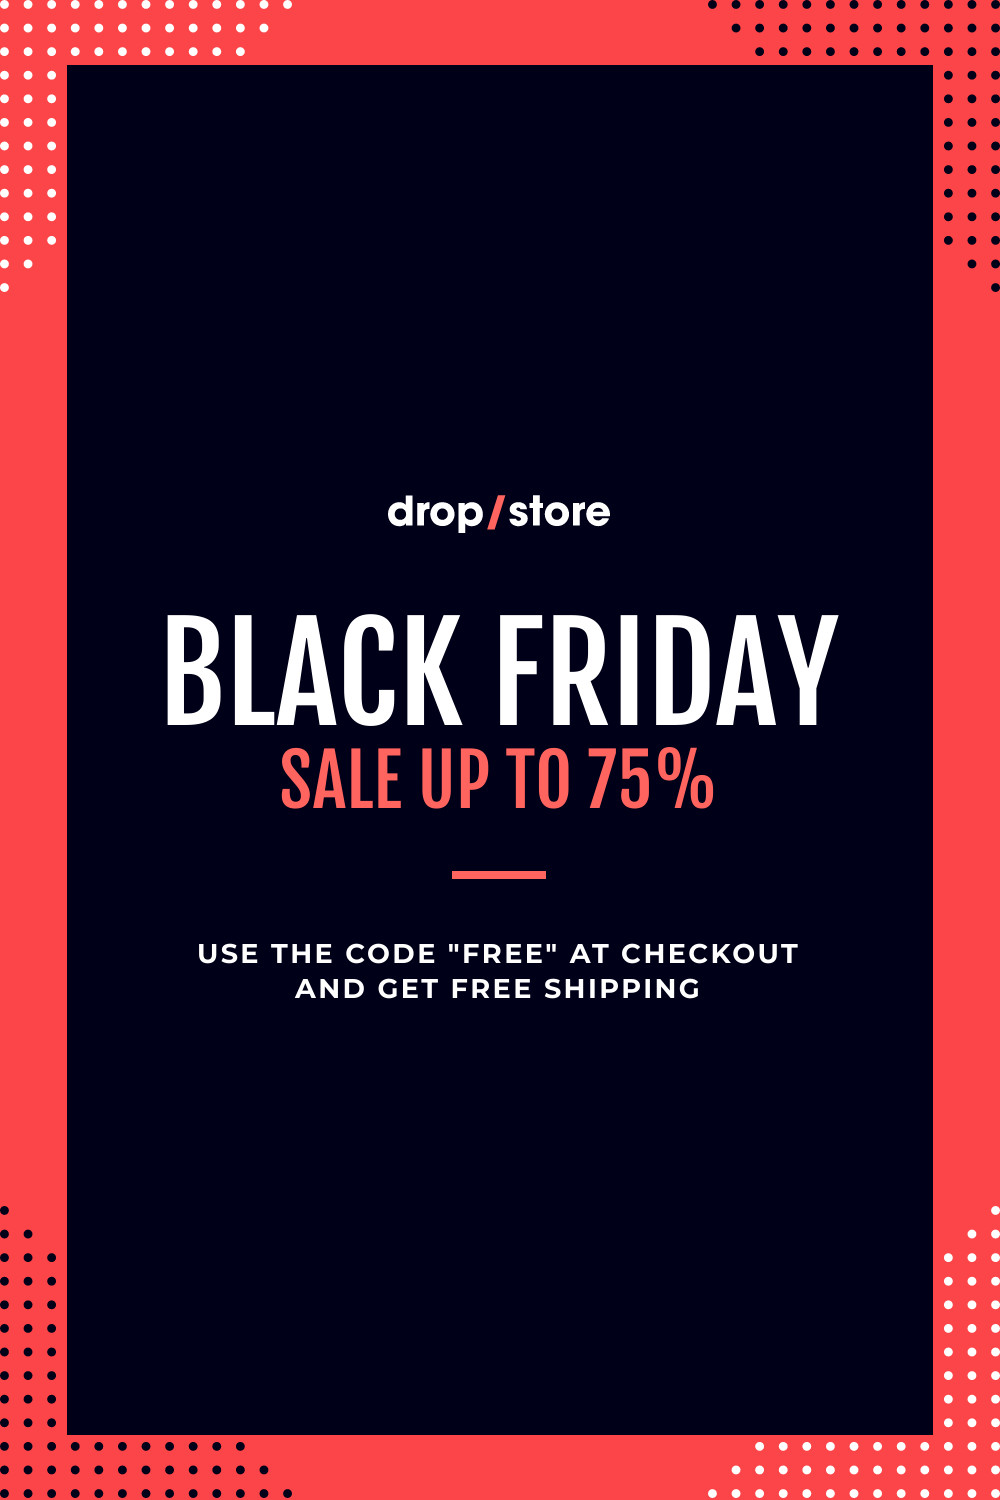 Drop Store Dots Black Friday Facebook Cover 820x360